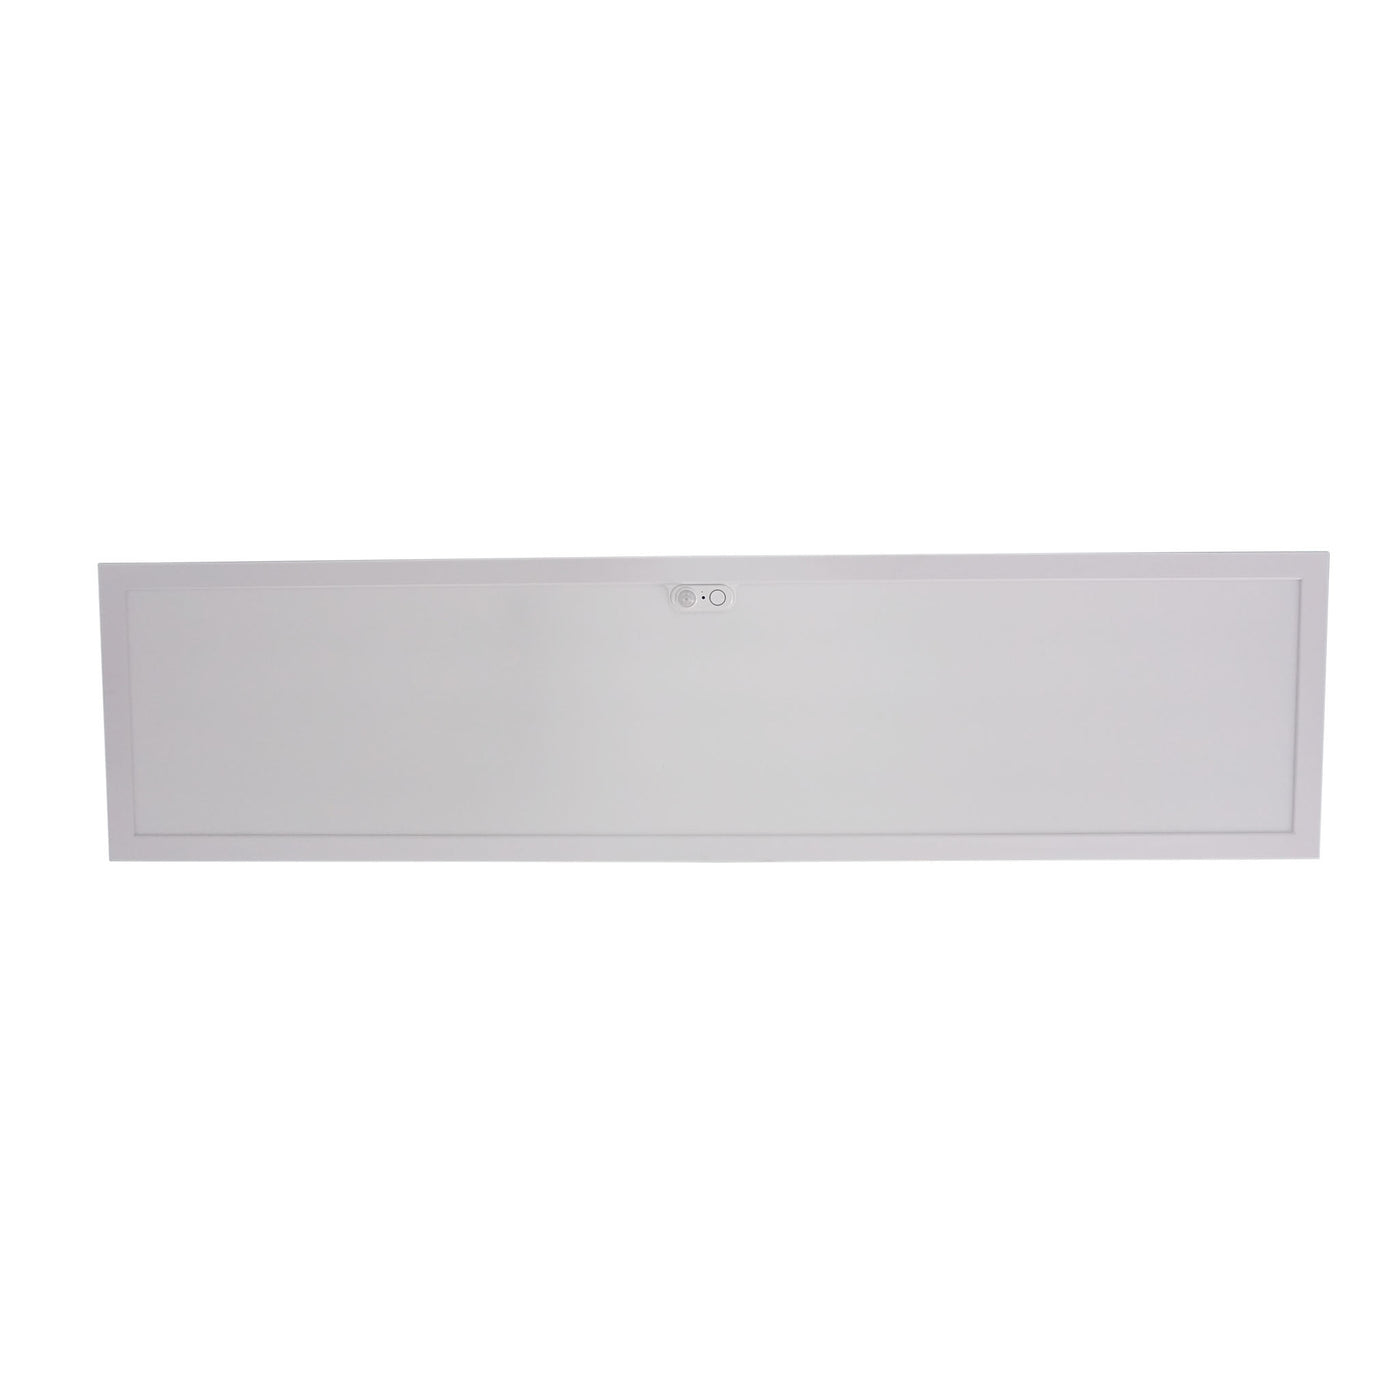 1 x 4 Foot G2 Back Lit LED Flat Panel, Selectable Wattage and CCT, 0-10 Dim Option, 120-277V